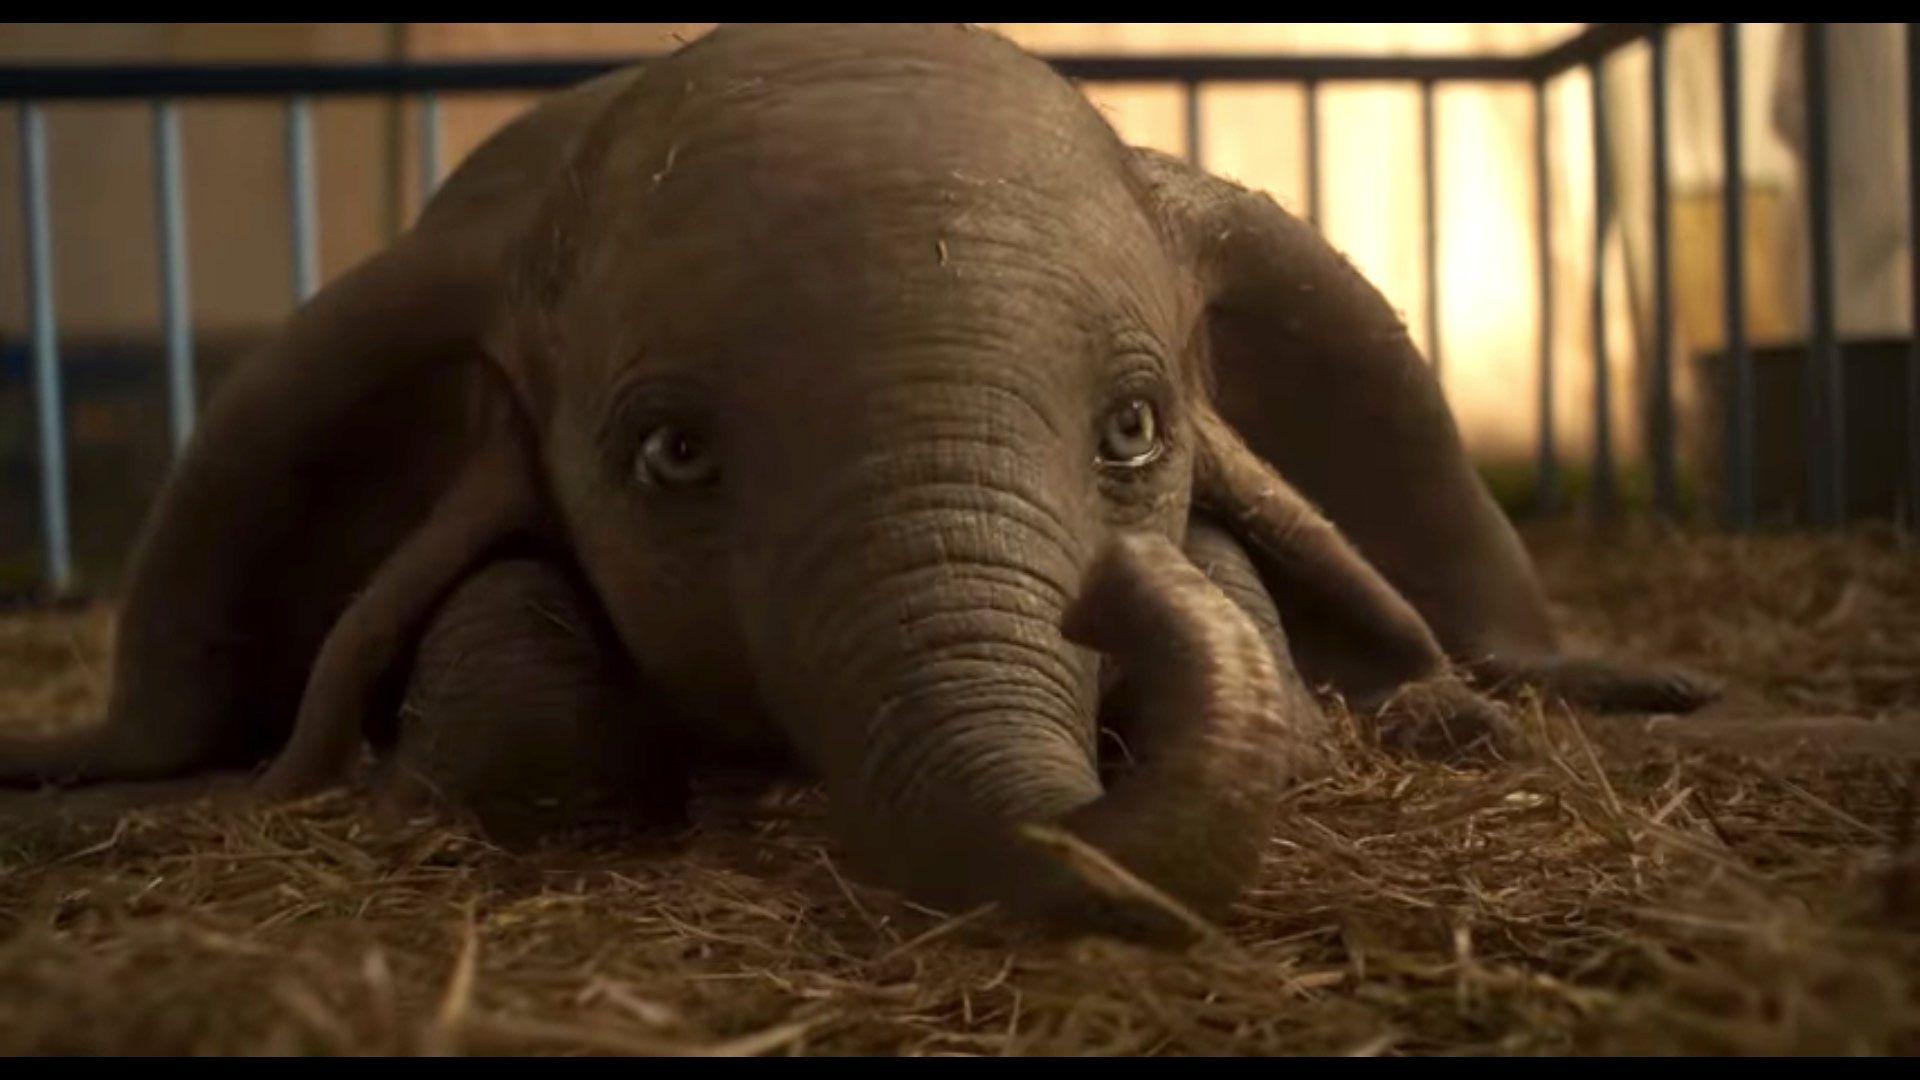 Dumbo 2019 movie reveals new trailer with heartbreaking storyline